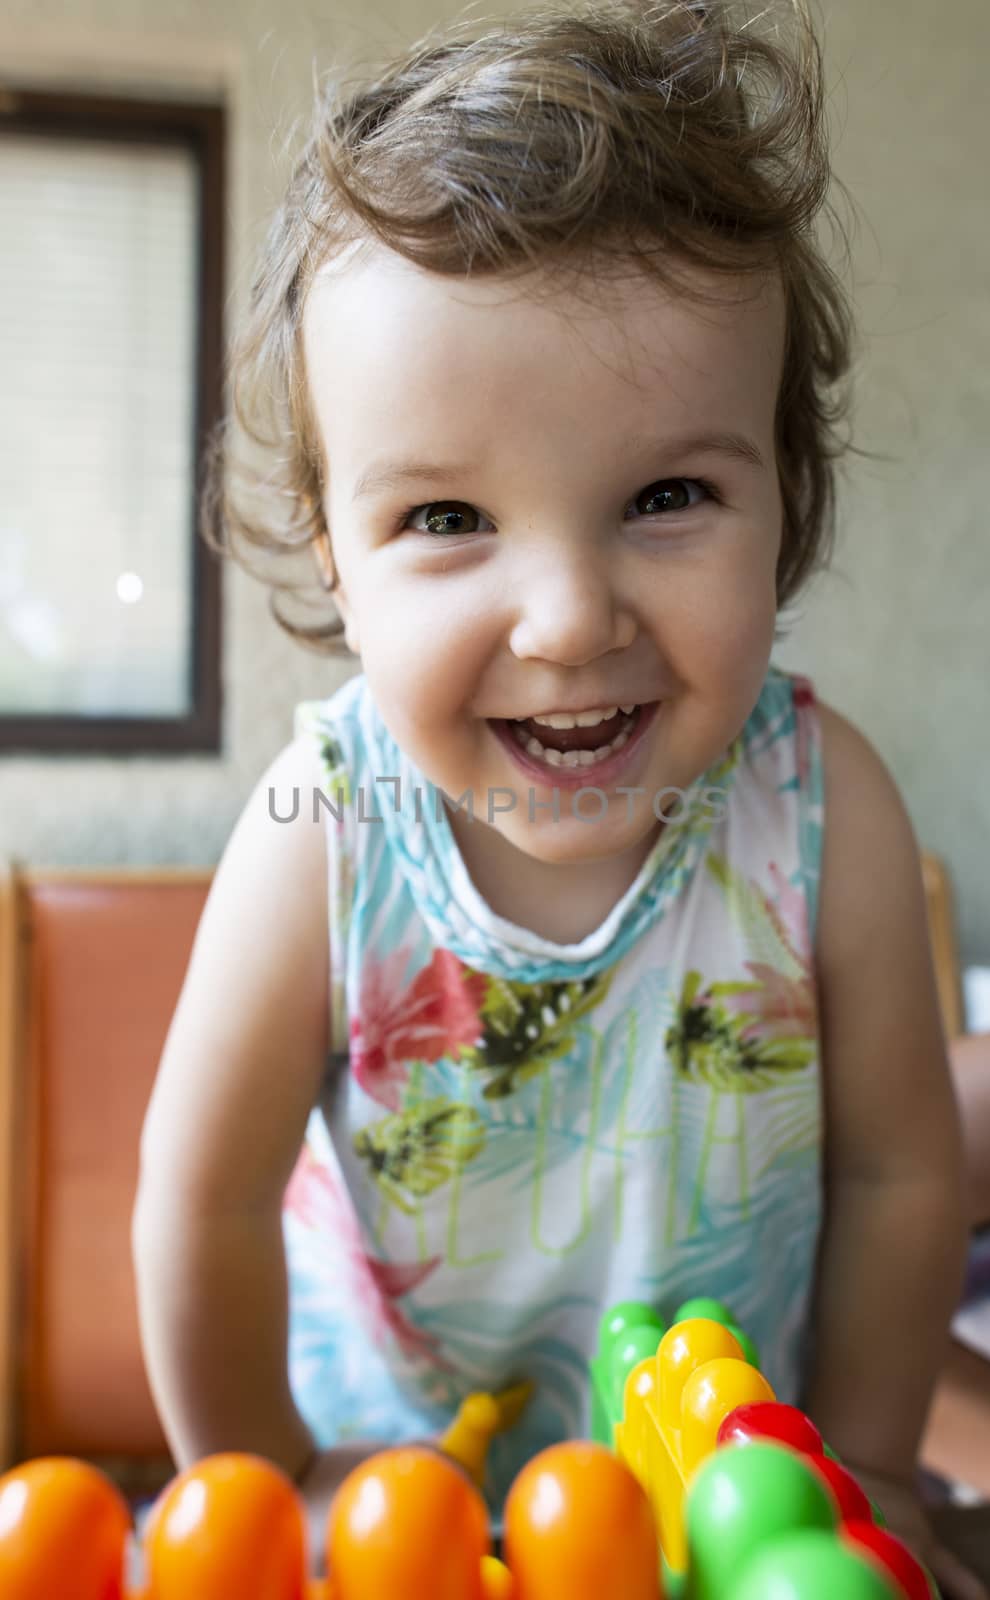 Smiling little girl by deyan_georgiev